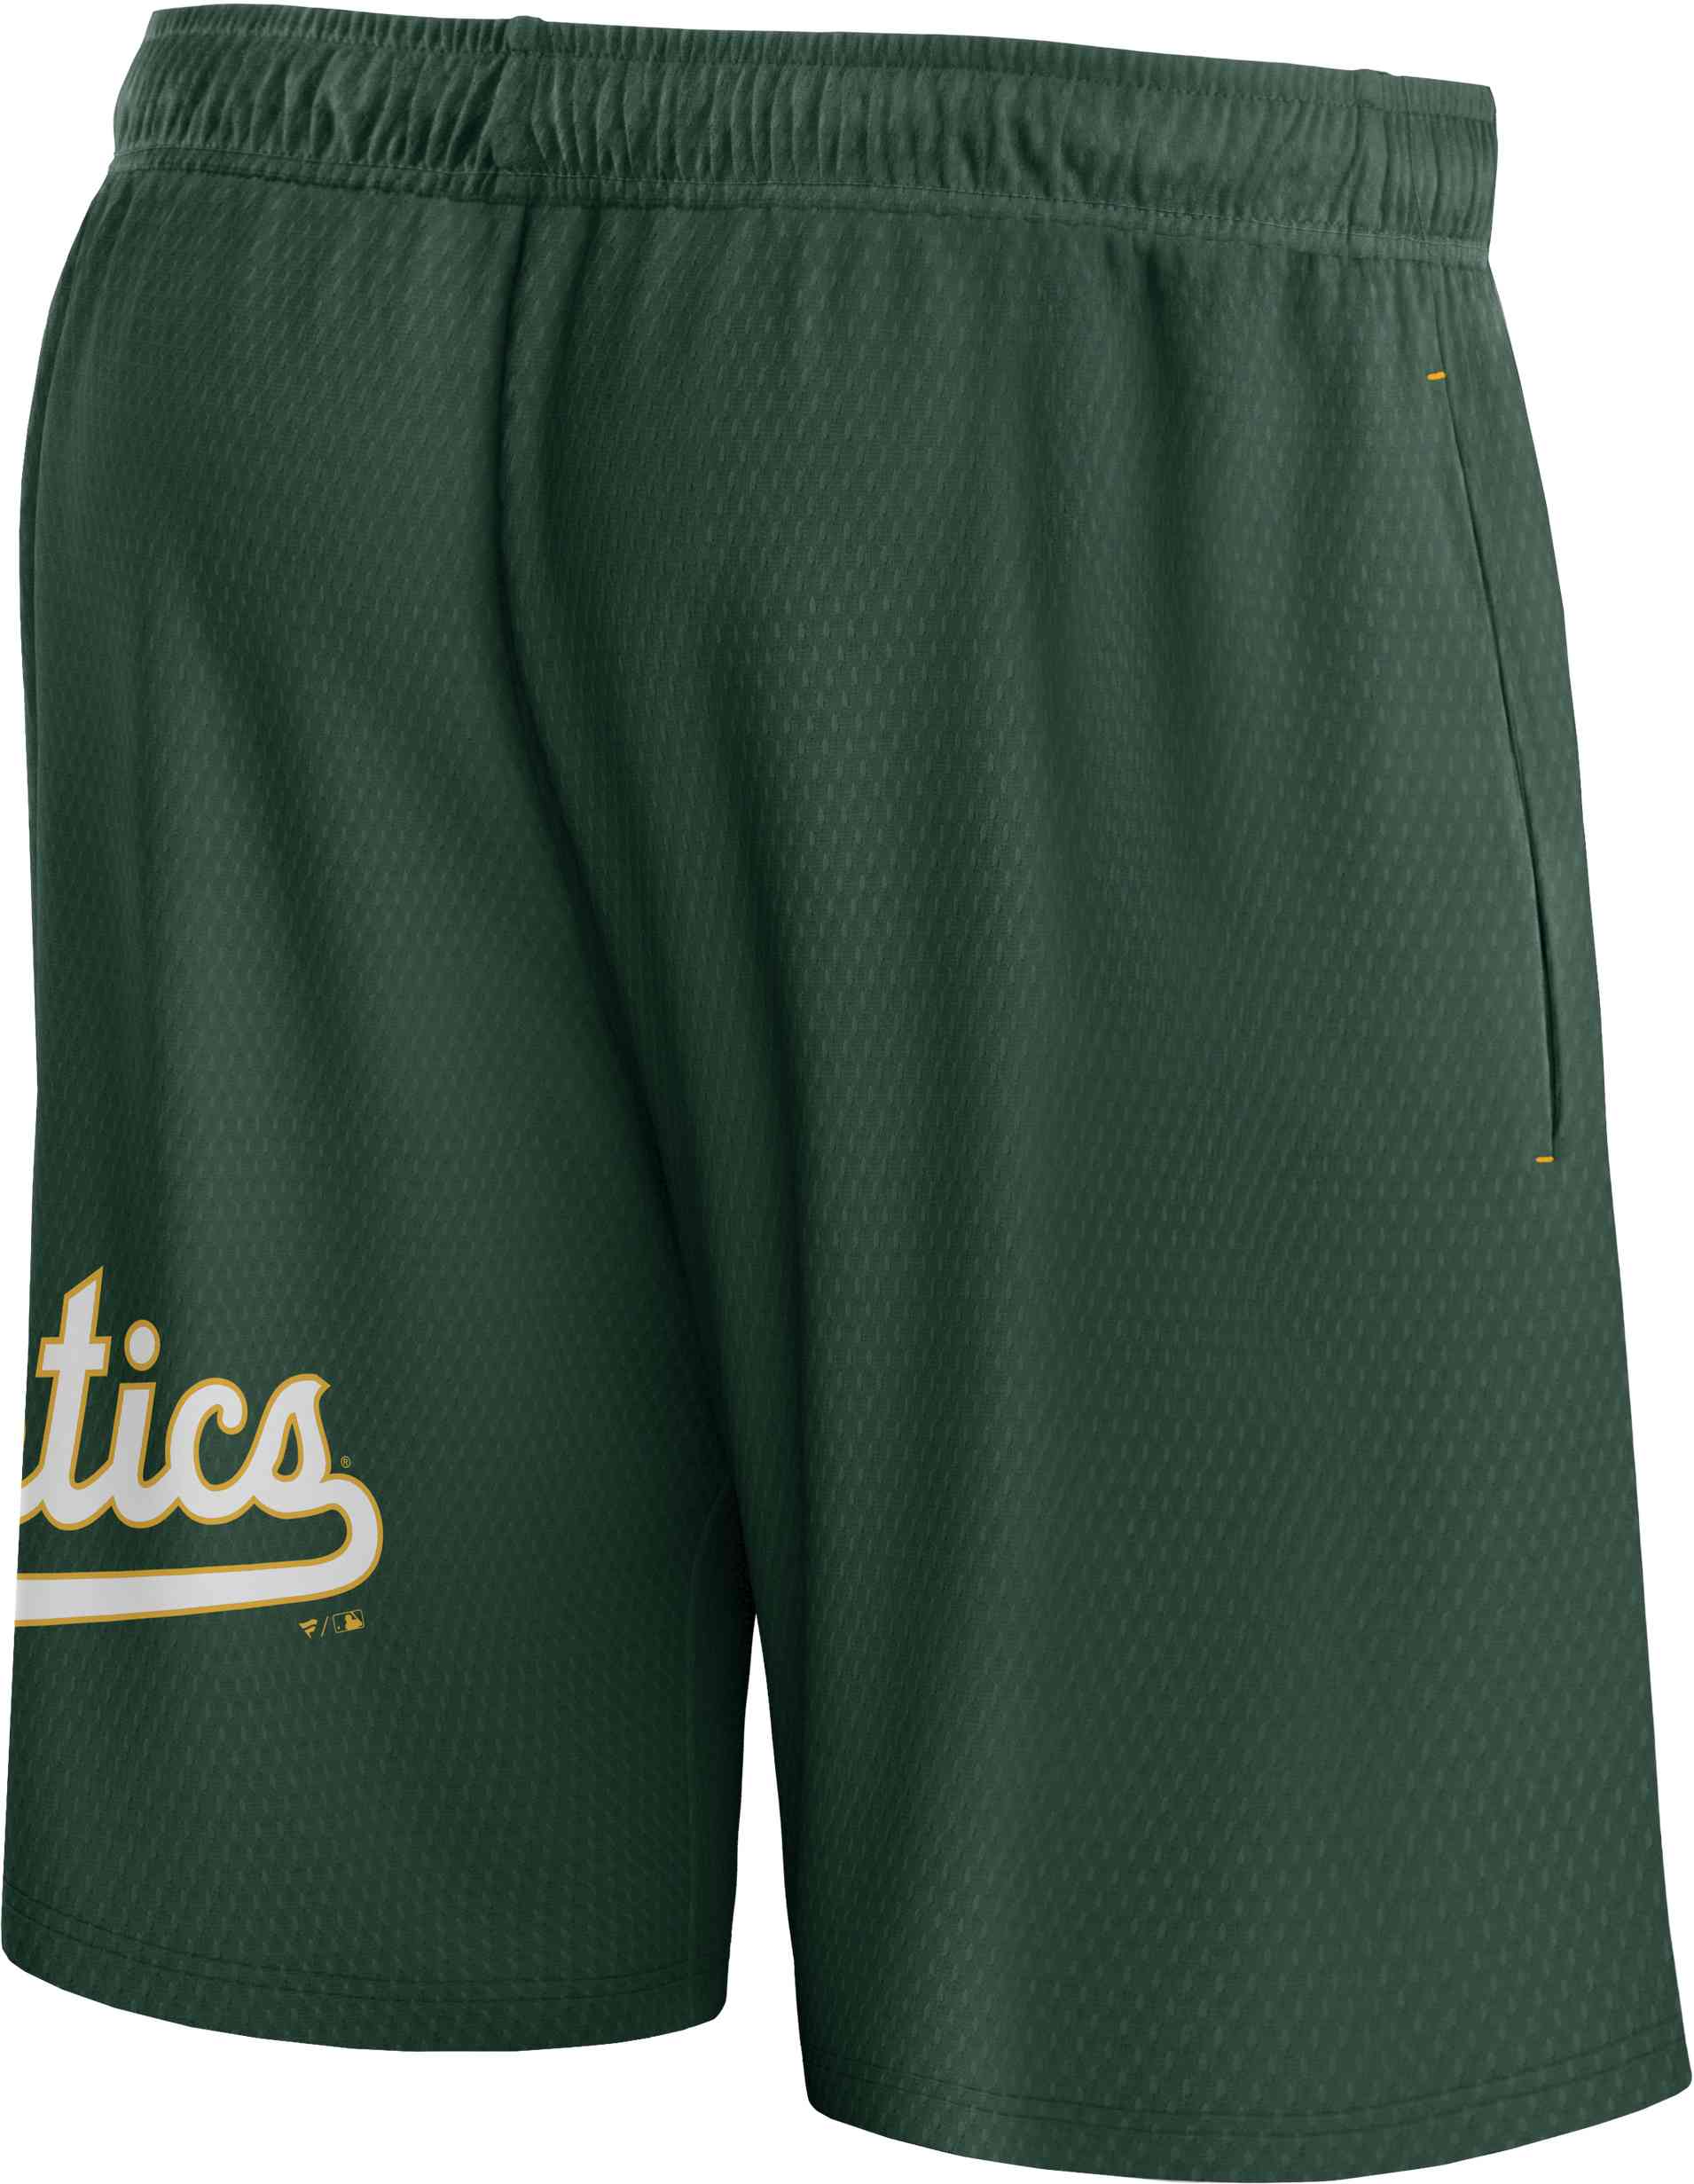 Fanatics - MLB Oakland Athletics Mesh Shorts